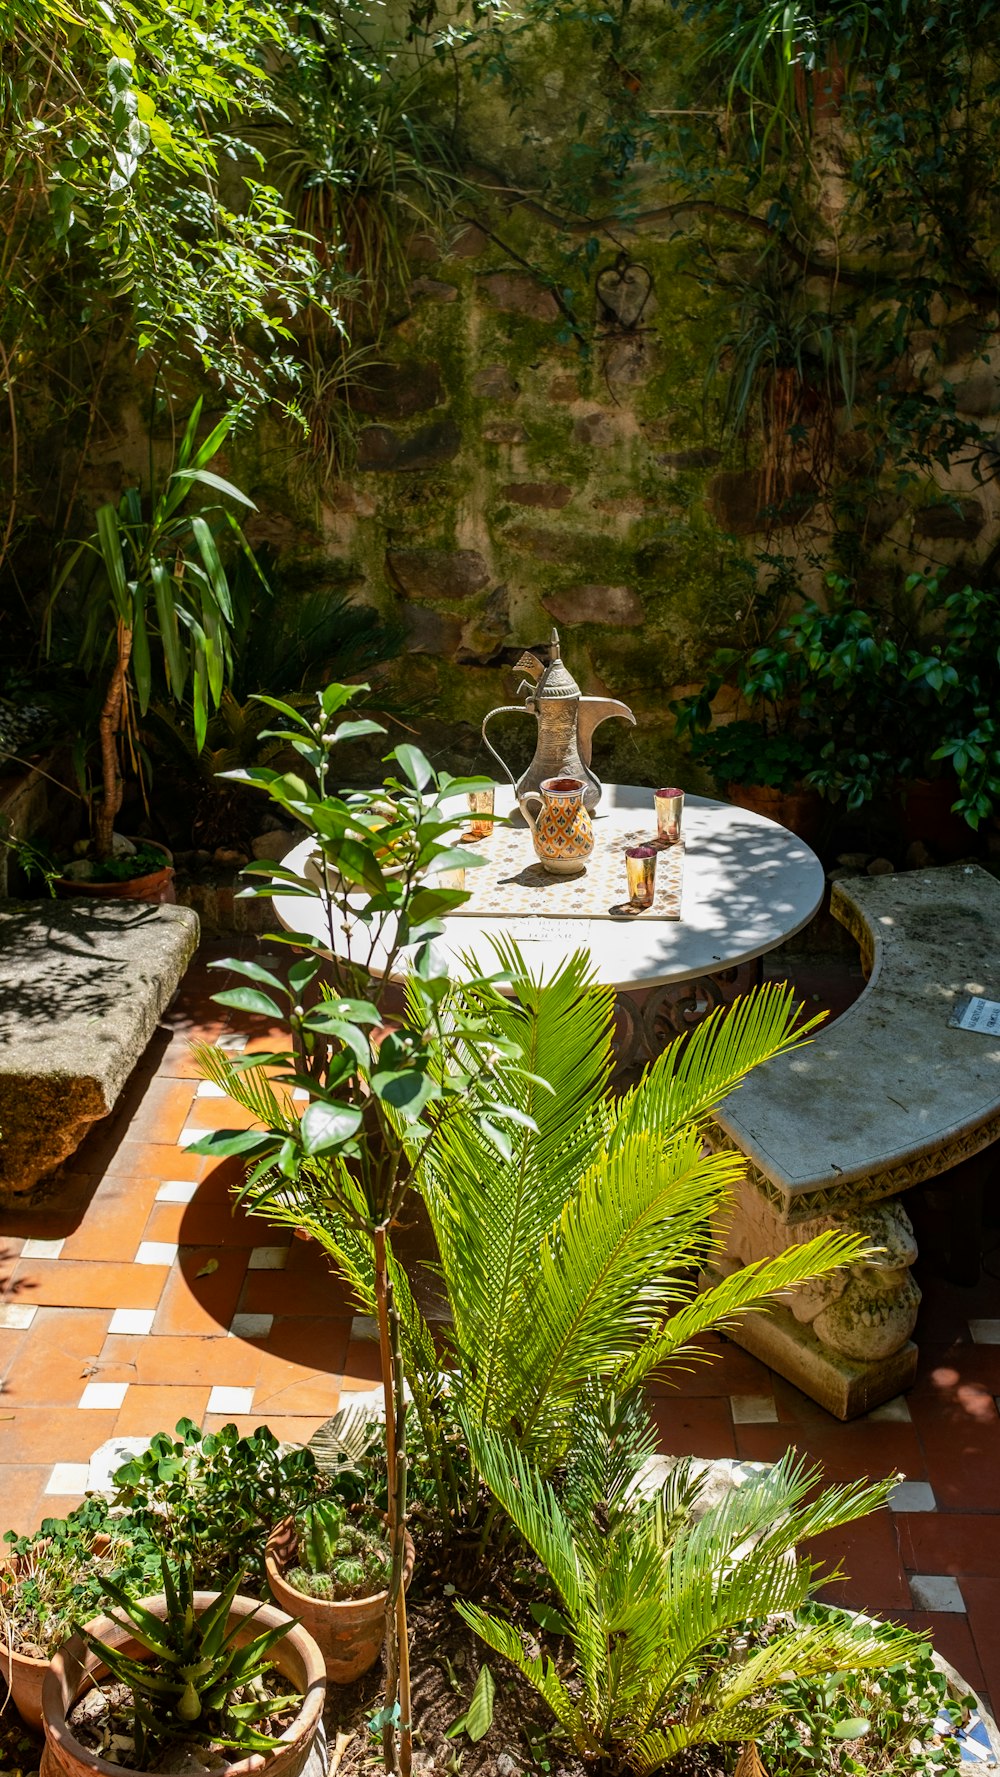 turkish tea set on outdoor table during daytime